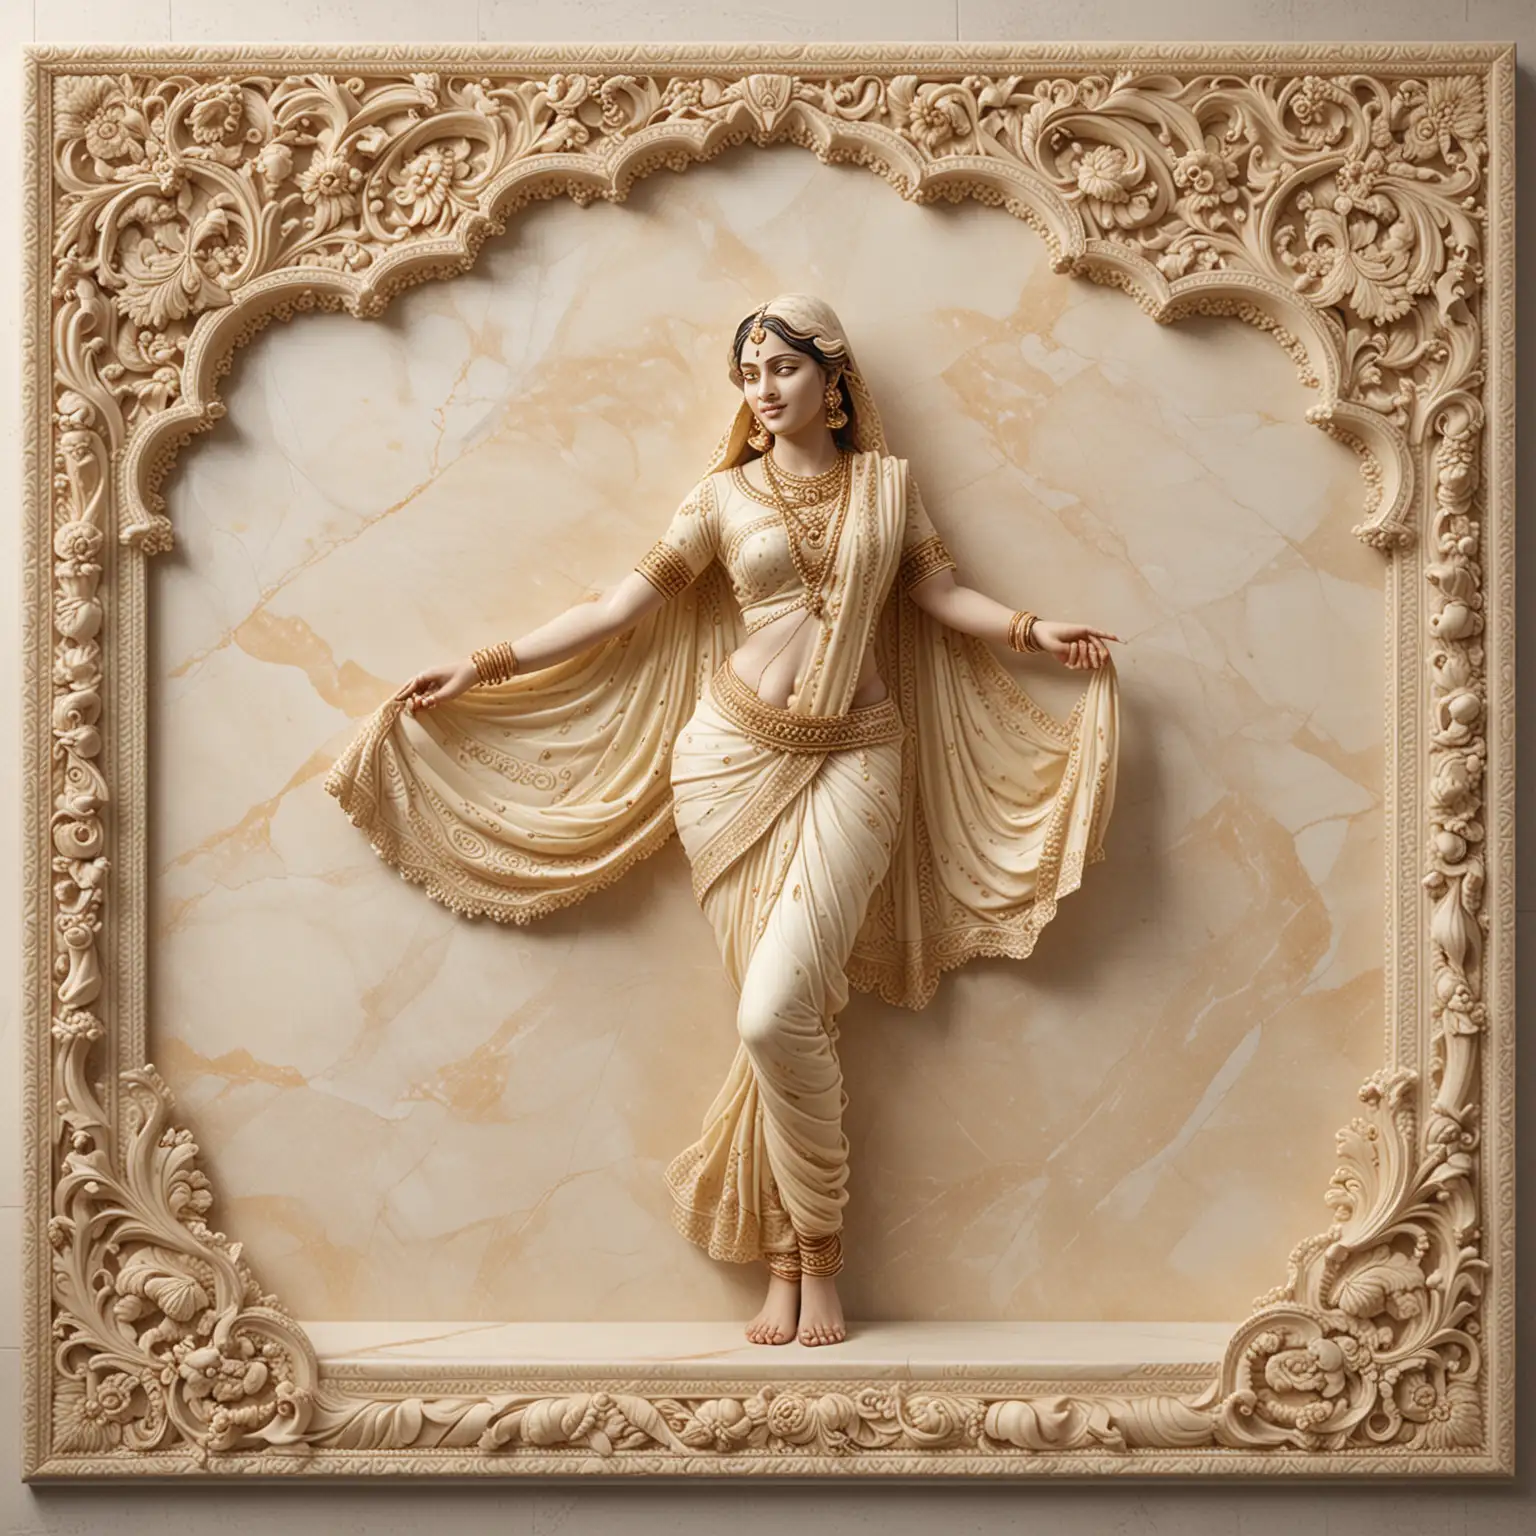 Elegant-Indian-Woman-Dancing-in-Cream-Marble-Relief-Panel